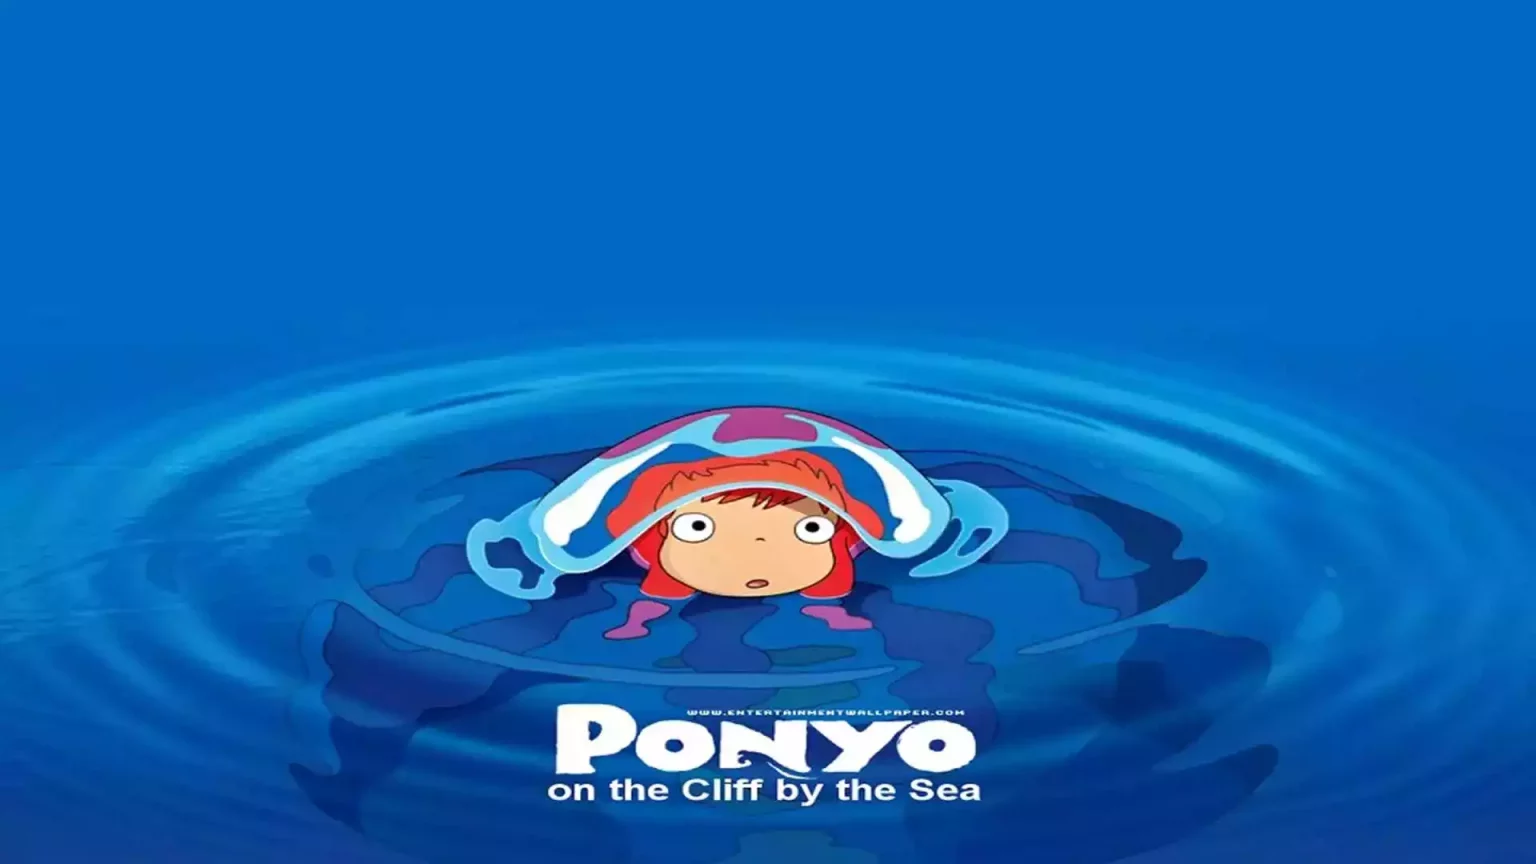 küçük deniz kızı ponyo film